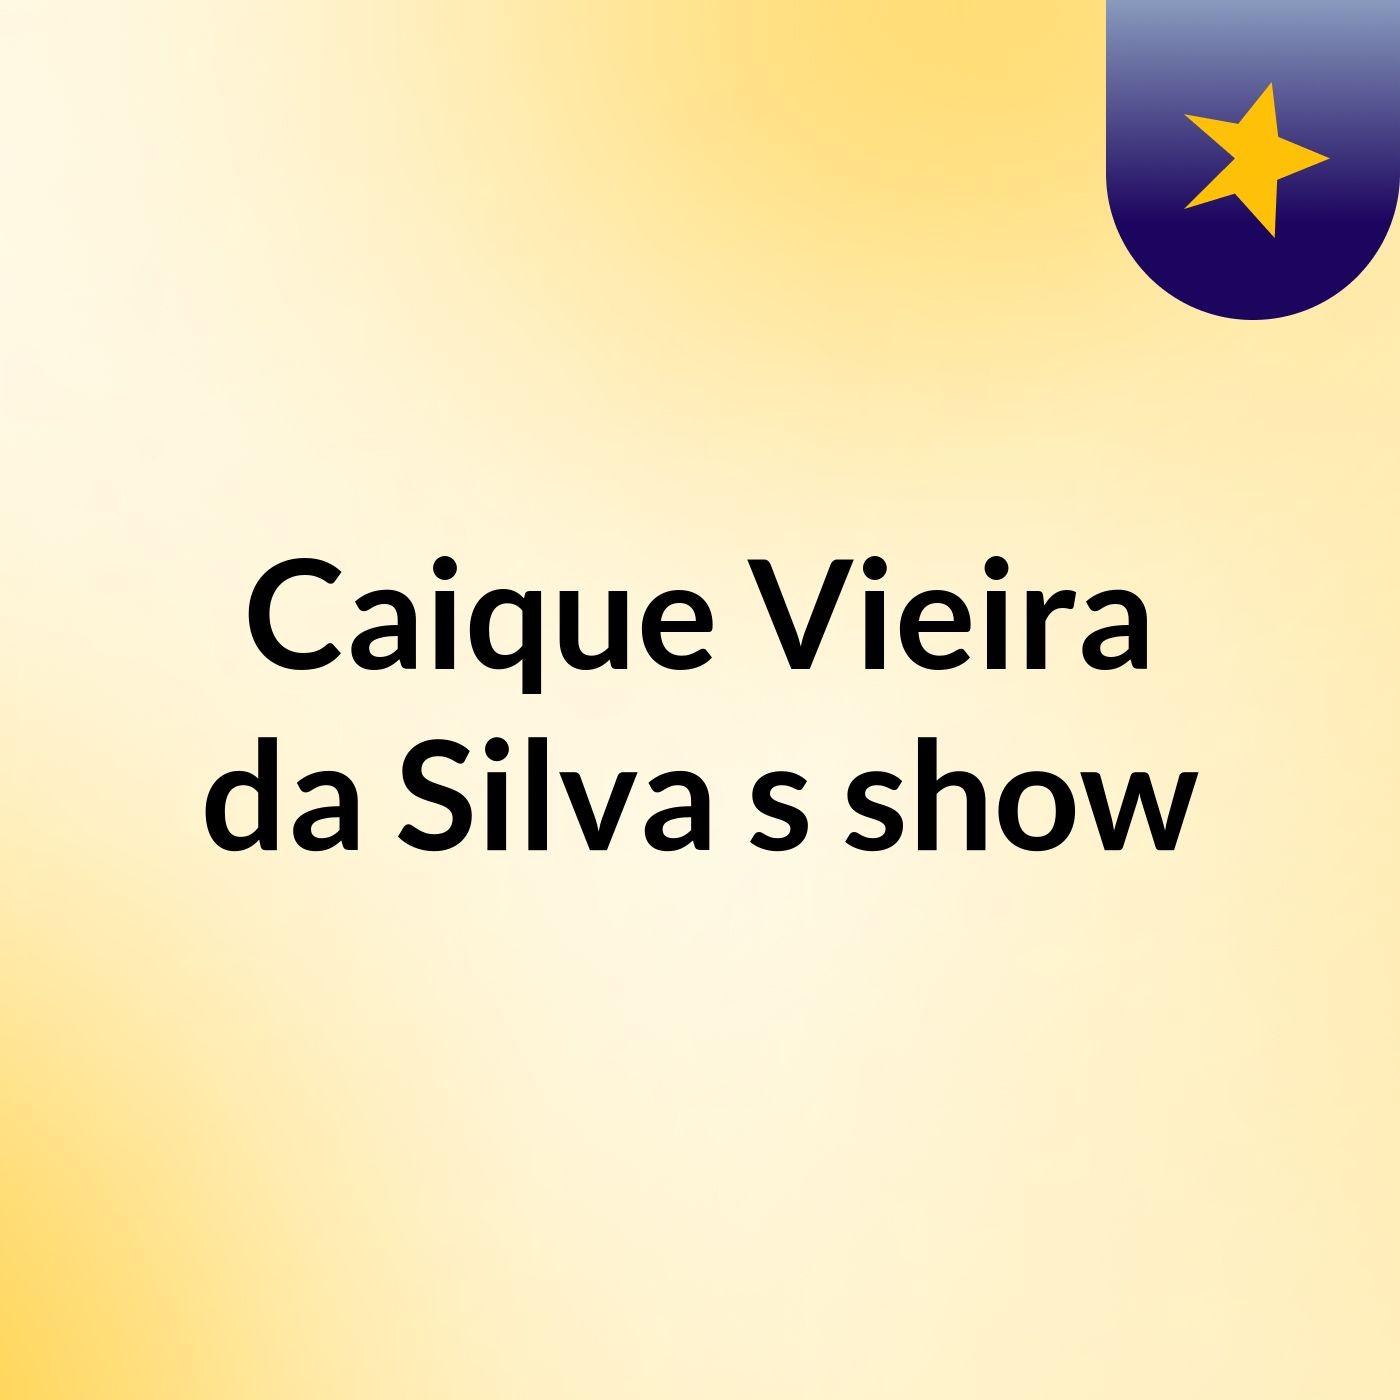 Caique Vieira da Silva's show